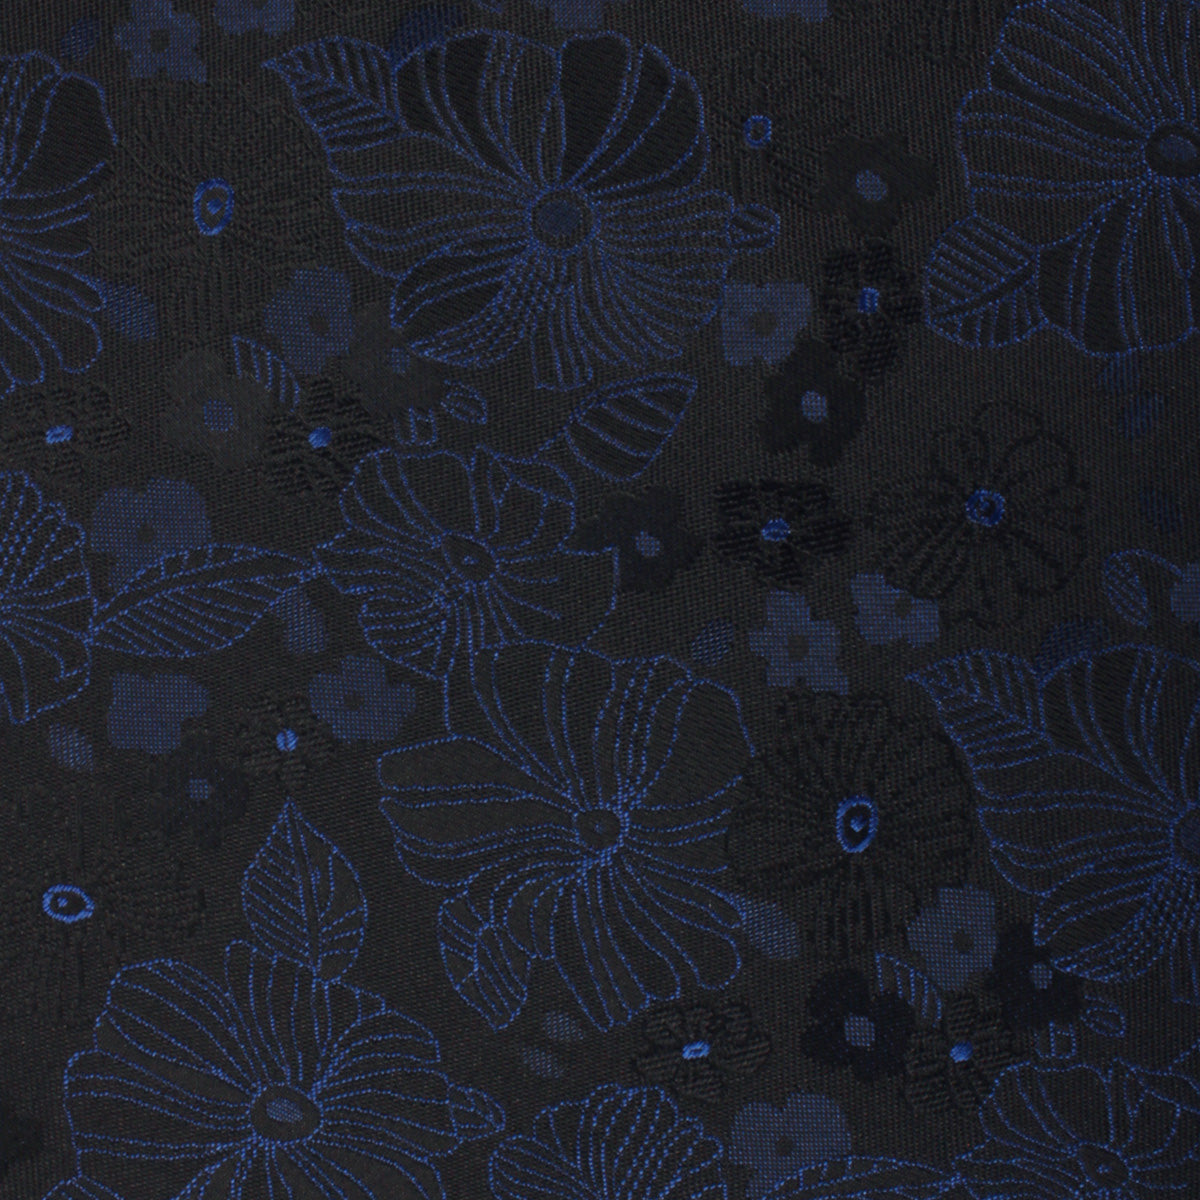 Asagao Midnight Blue-Black Floral Pocket Squares